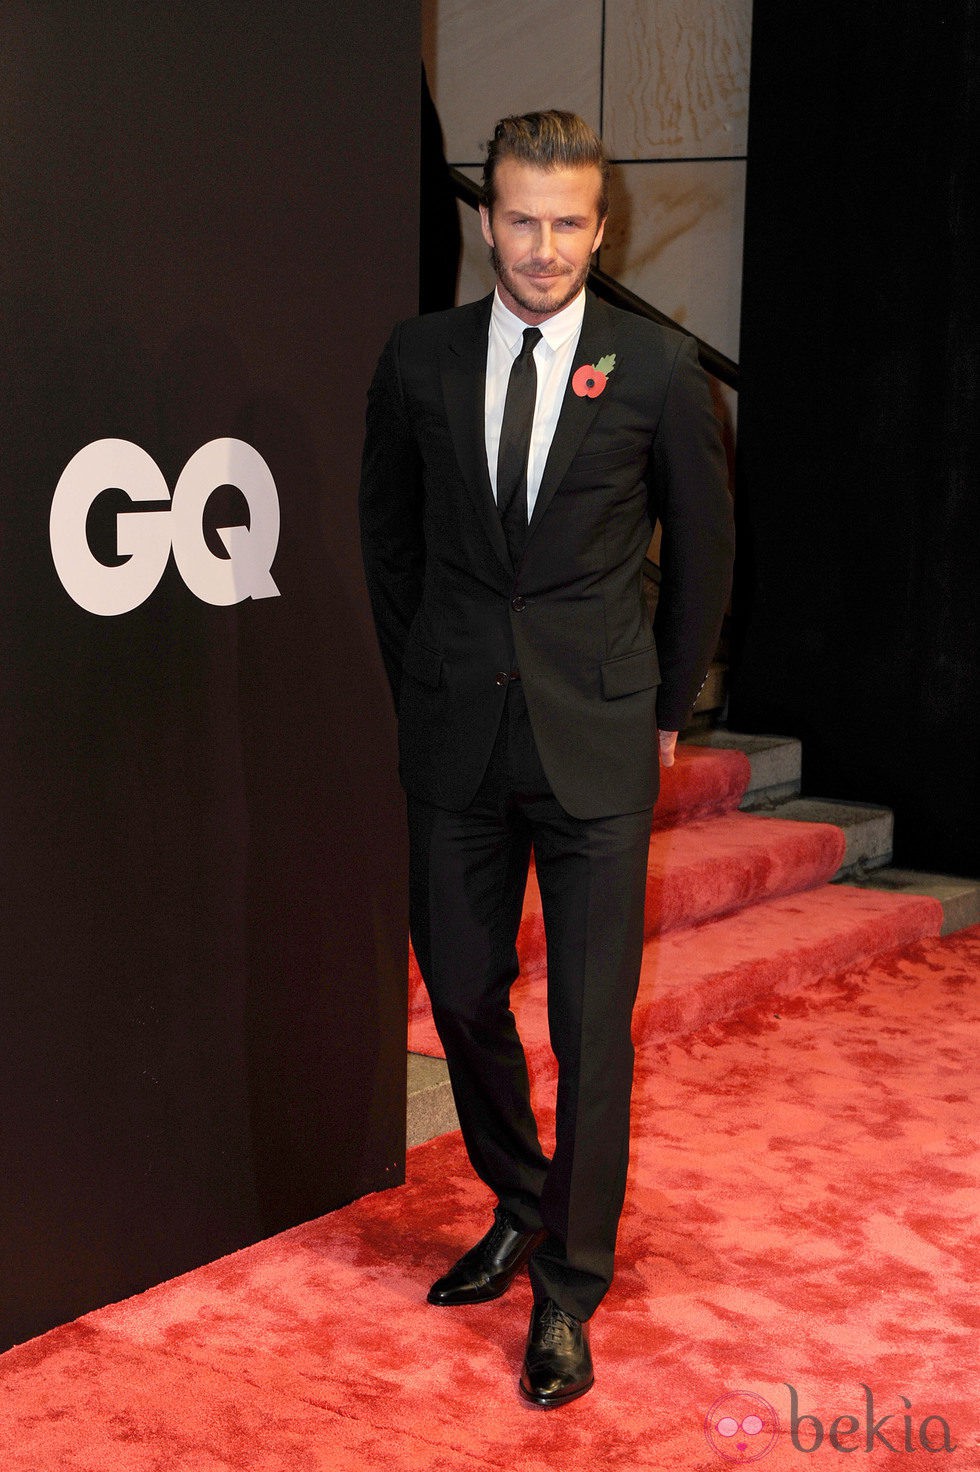 David Beckham en los premios GQ 2013 en Berlín